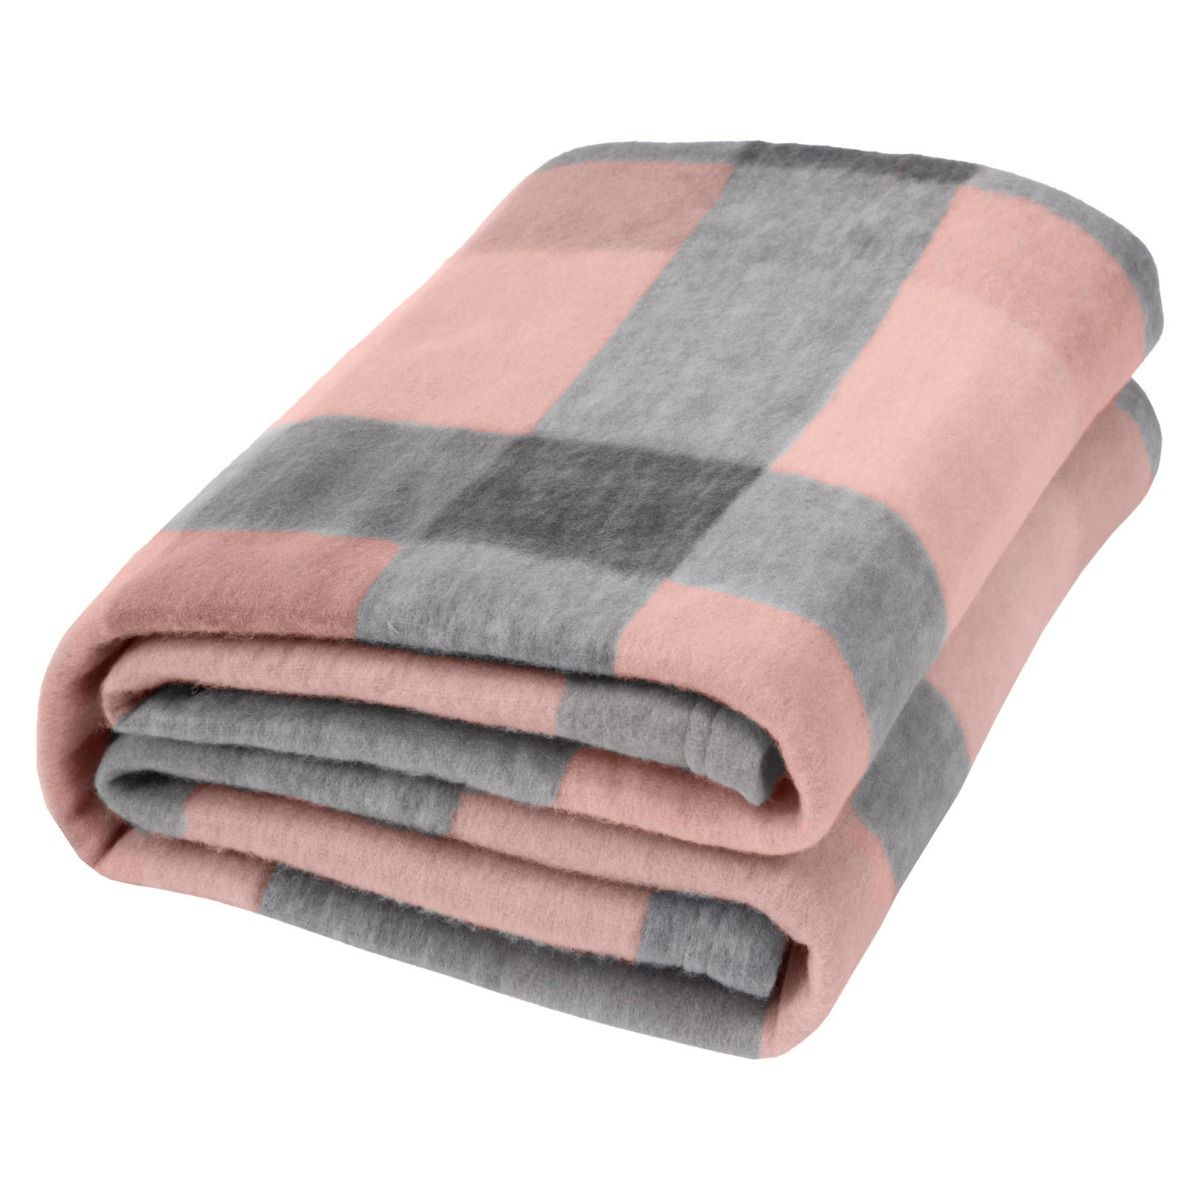 Dreamscene Tartan Check Fleece Throw, Blush Pink/Grey - 50 x 60 inches